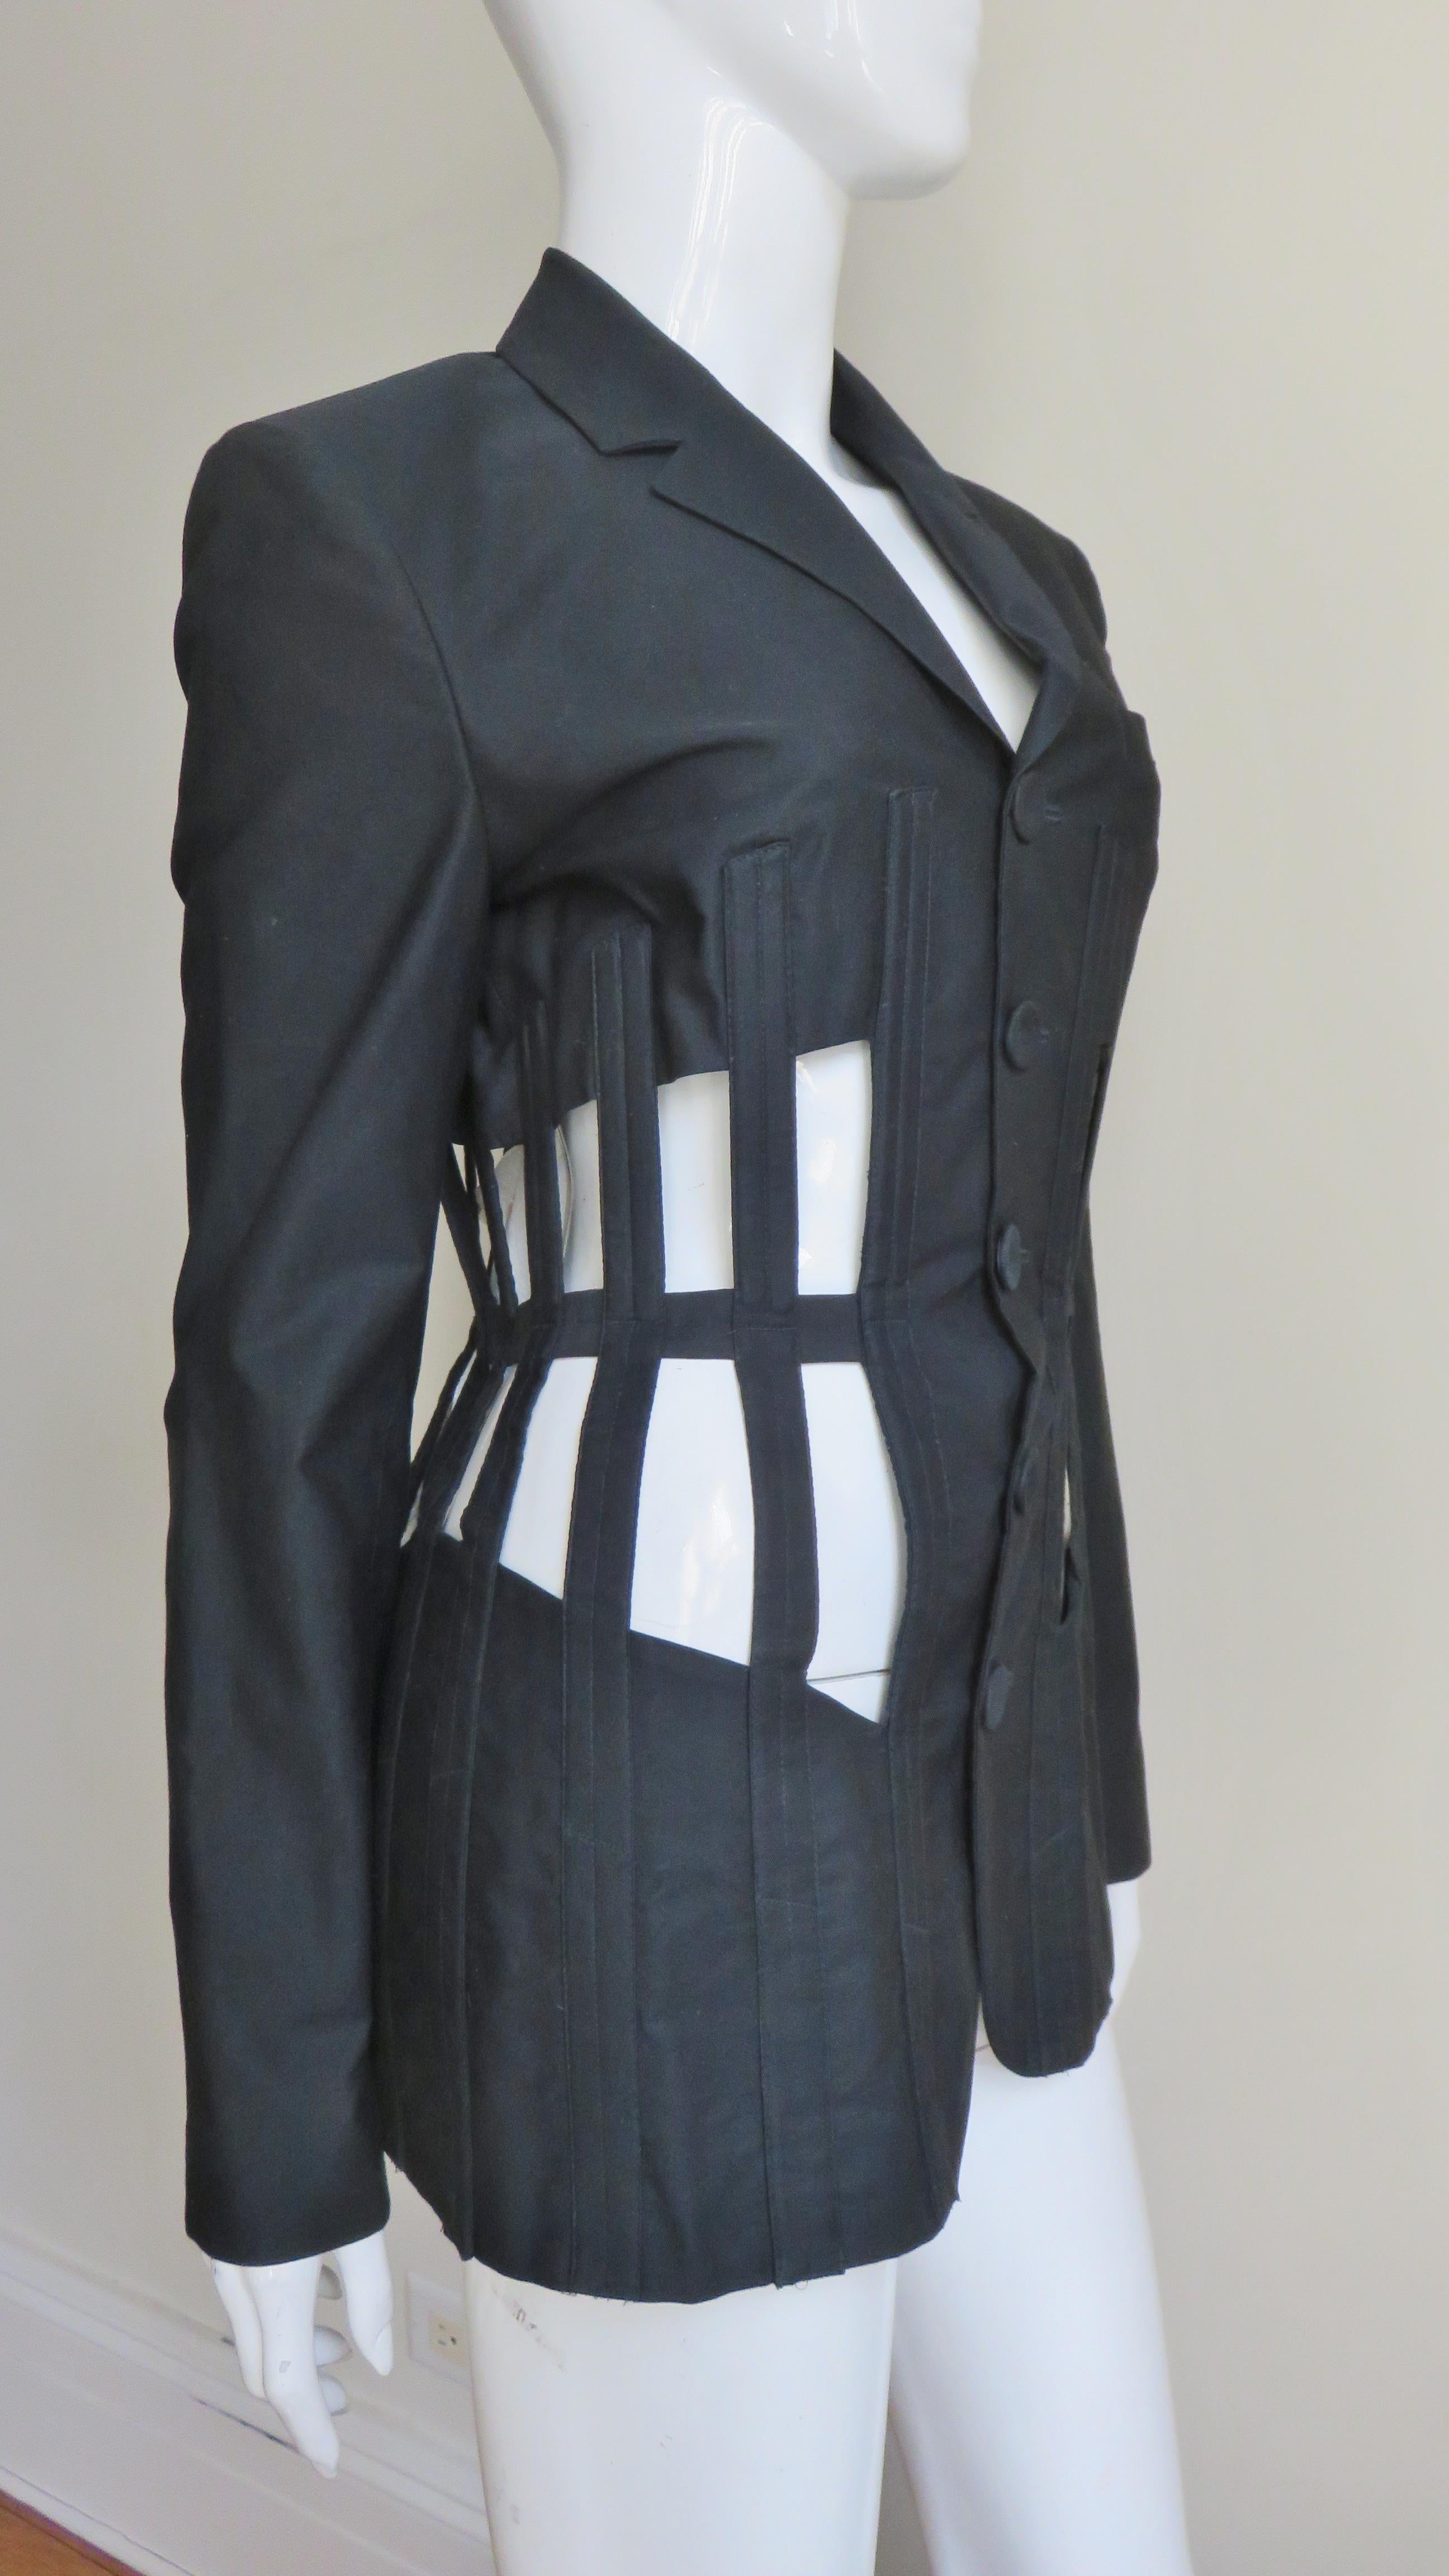 Jean Paul Gaultier Iconic Cage Corset lace up Jacket Pant Suit S/S 1989 For Sale 3